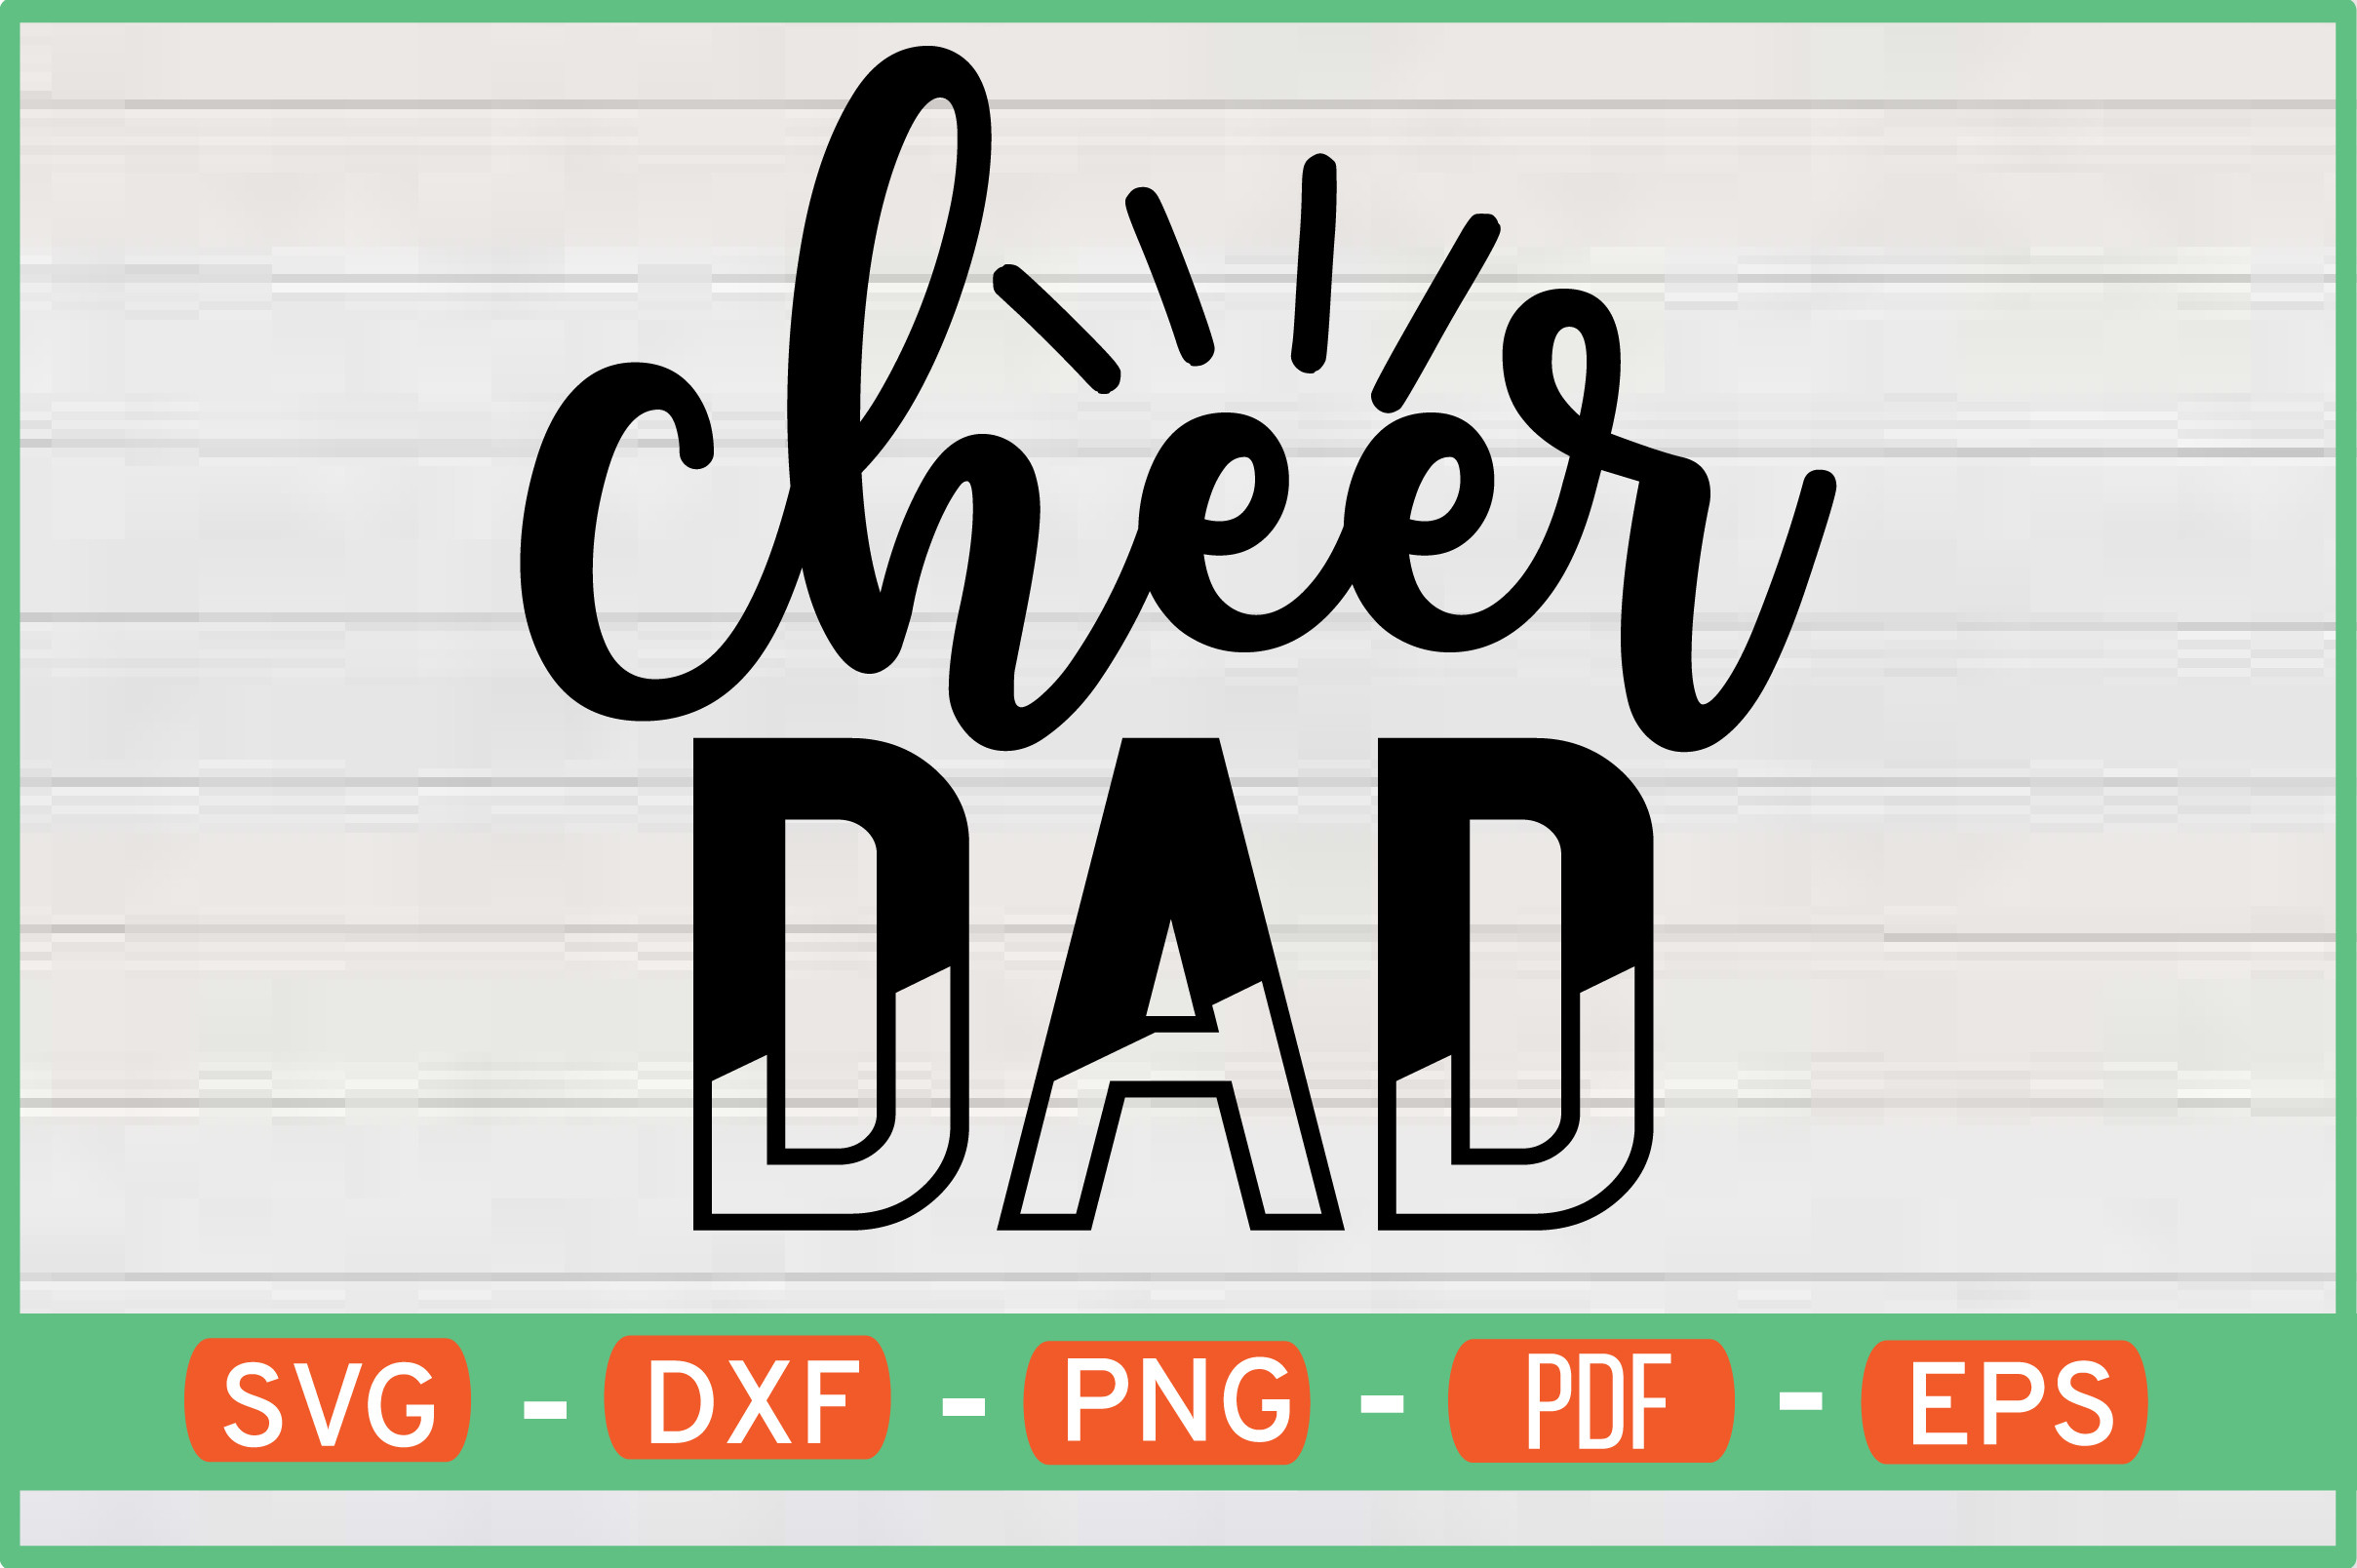 Cheer Dad T-Shirt Designs Svg Free Graphic by ijdesignerbd777 ...